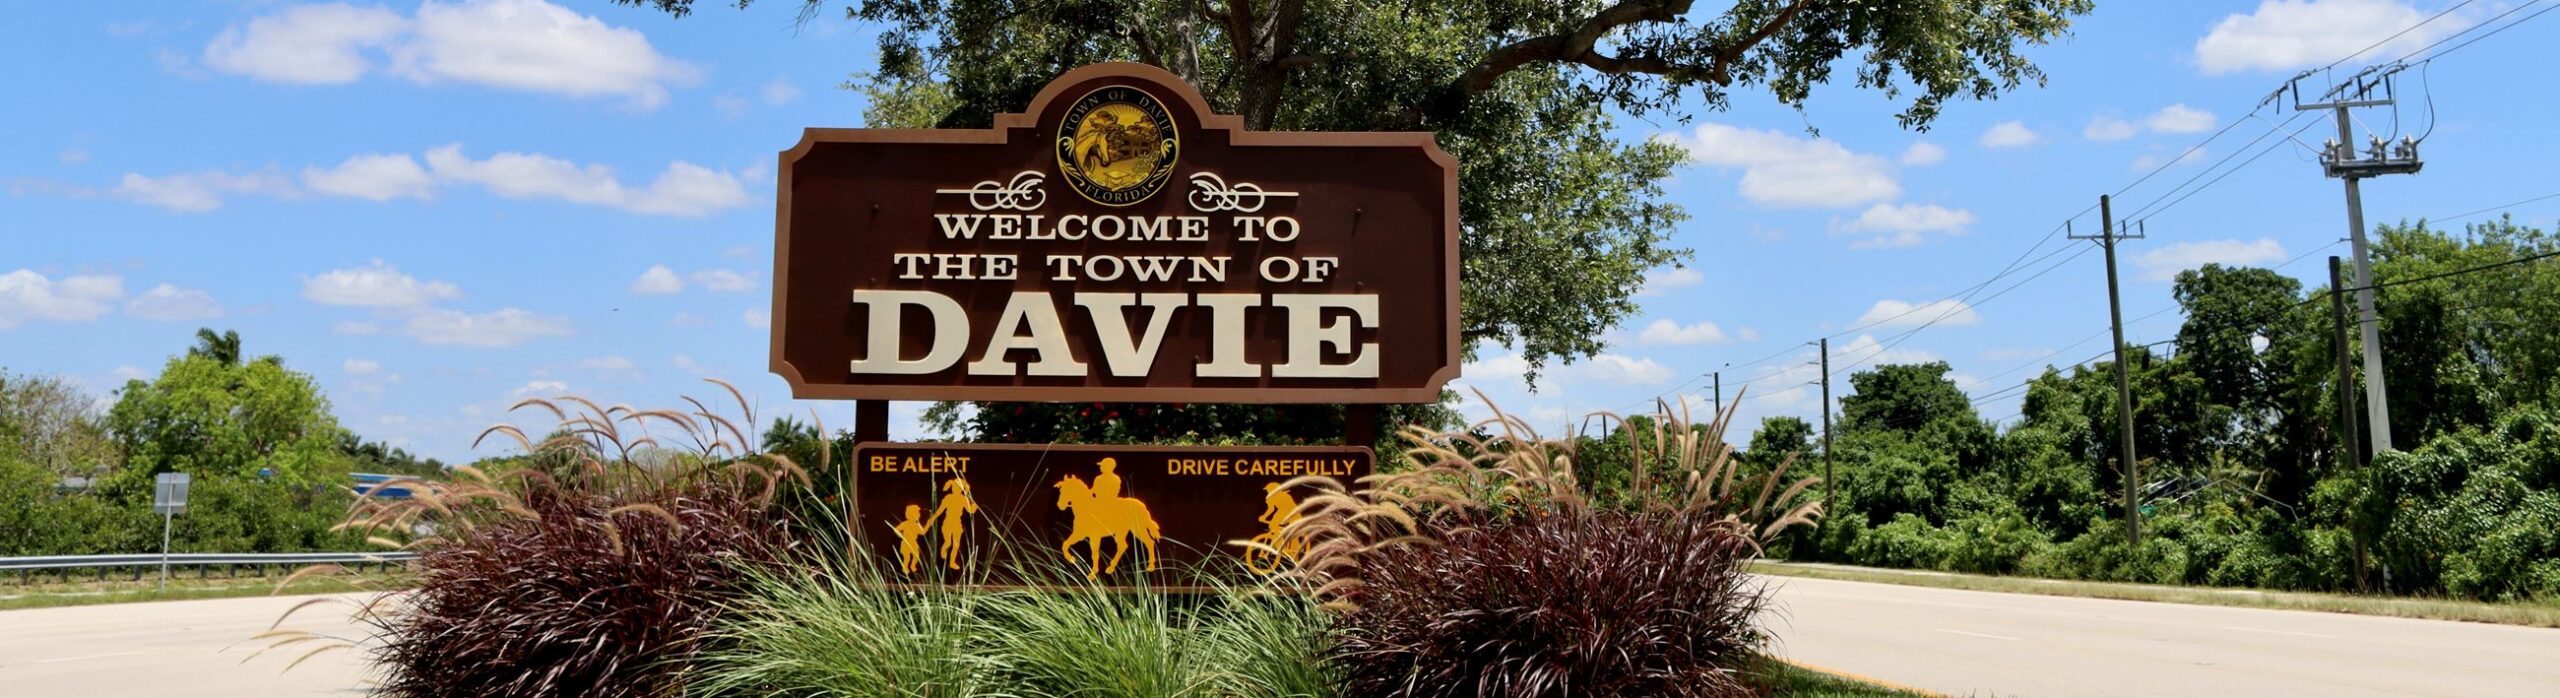 Motorcycle Injury Cases in Davie Town, Florida